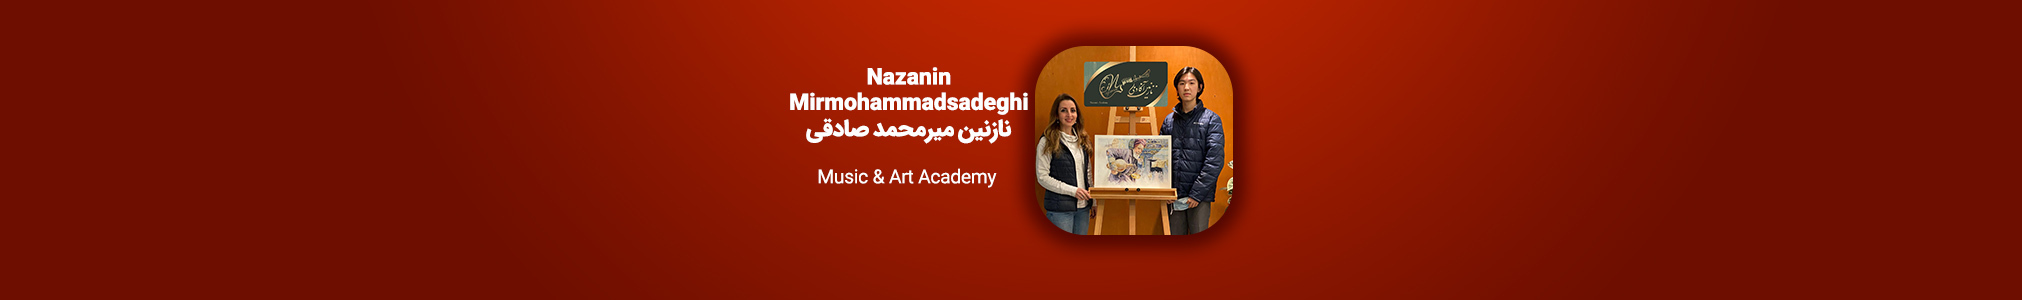 Nazanin Mirmohammadsadeghi